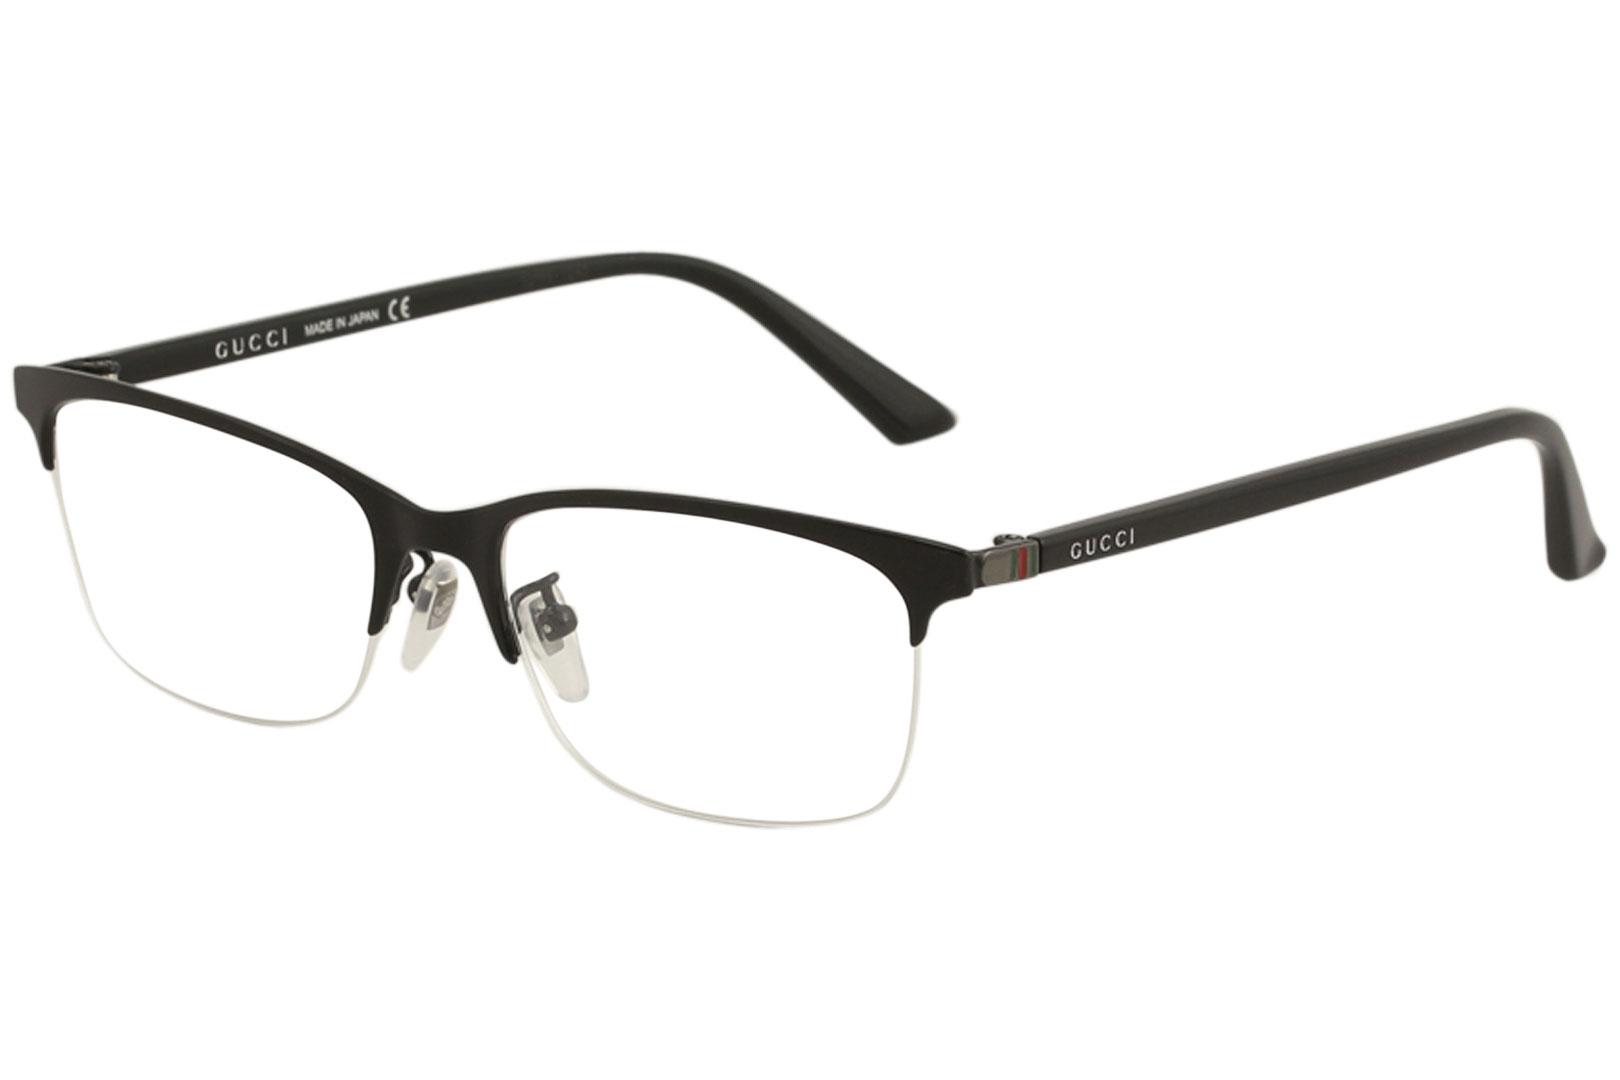 Gucci Men's Eyeglasses GG0132OJ GG/0132/OJ Half Rim Titanium Optical Frame - Black - Lens 56 Bridge 18 Temple 145mm